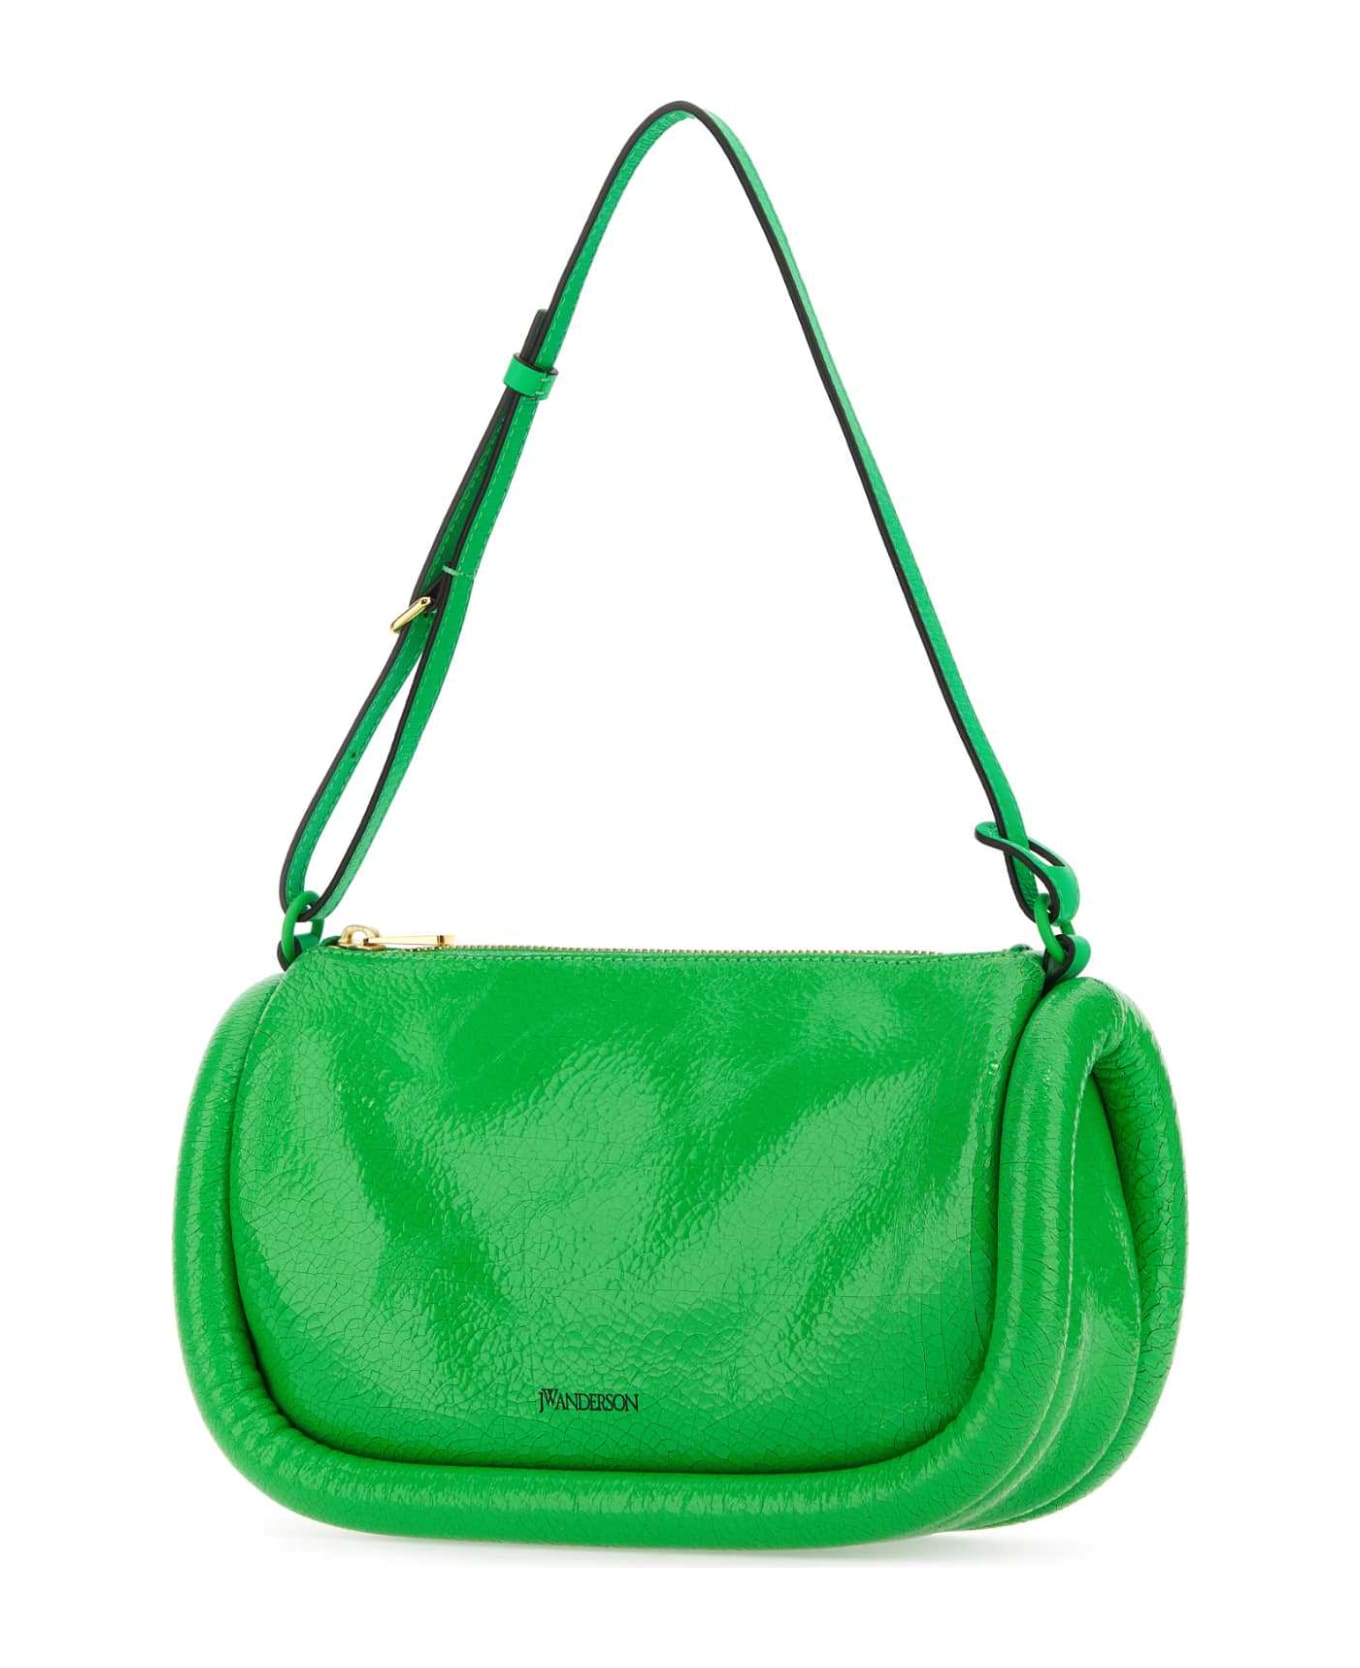 J.W. Anderson Fluo Green Leather Shoulder Bag - NEONGREEN